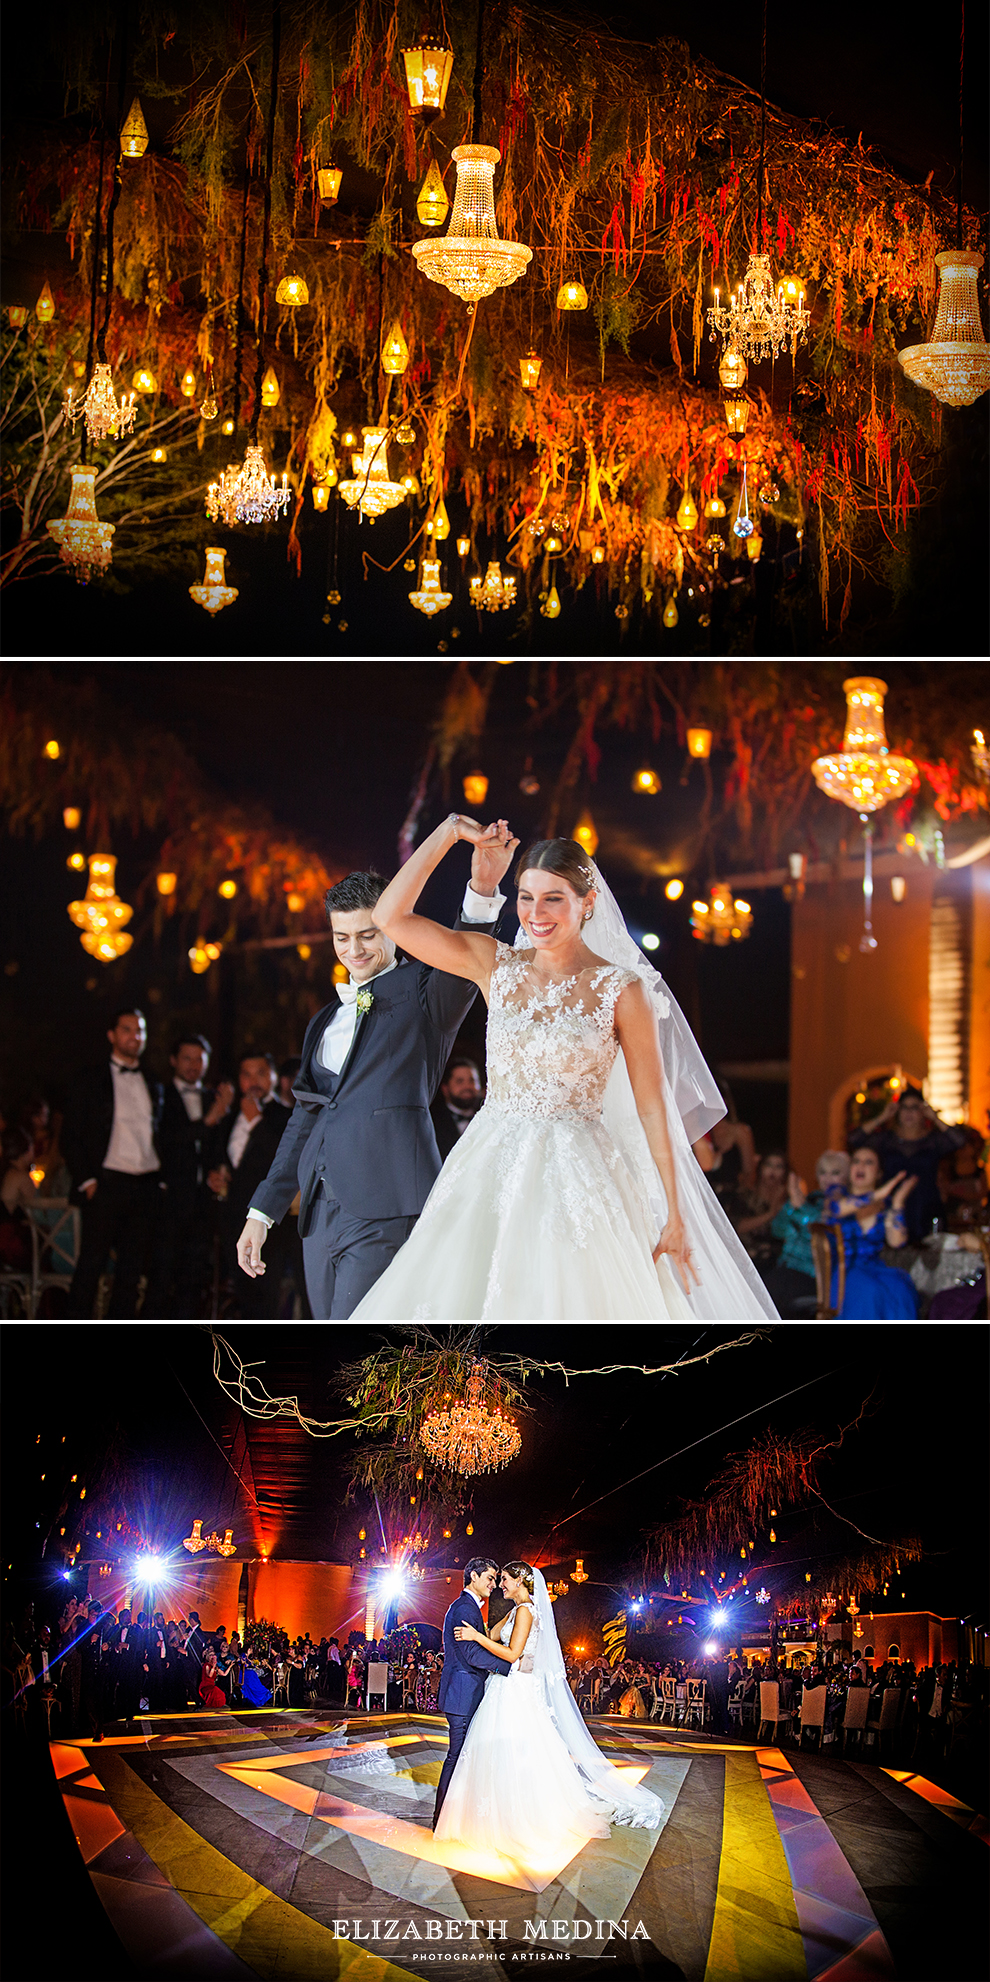 large wedding tent with chandelier decor and dance floor yucatan photography merida_0023 Yucatan Wedding Photography, Merida Photographerlarge wedding tent with chandelier decor and dance floor  